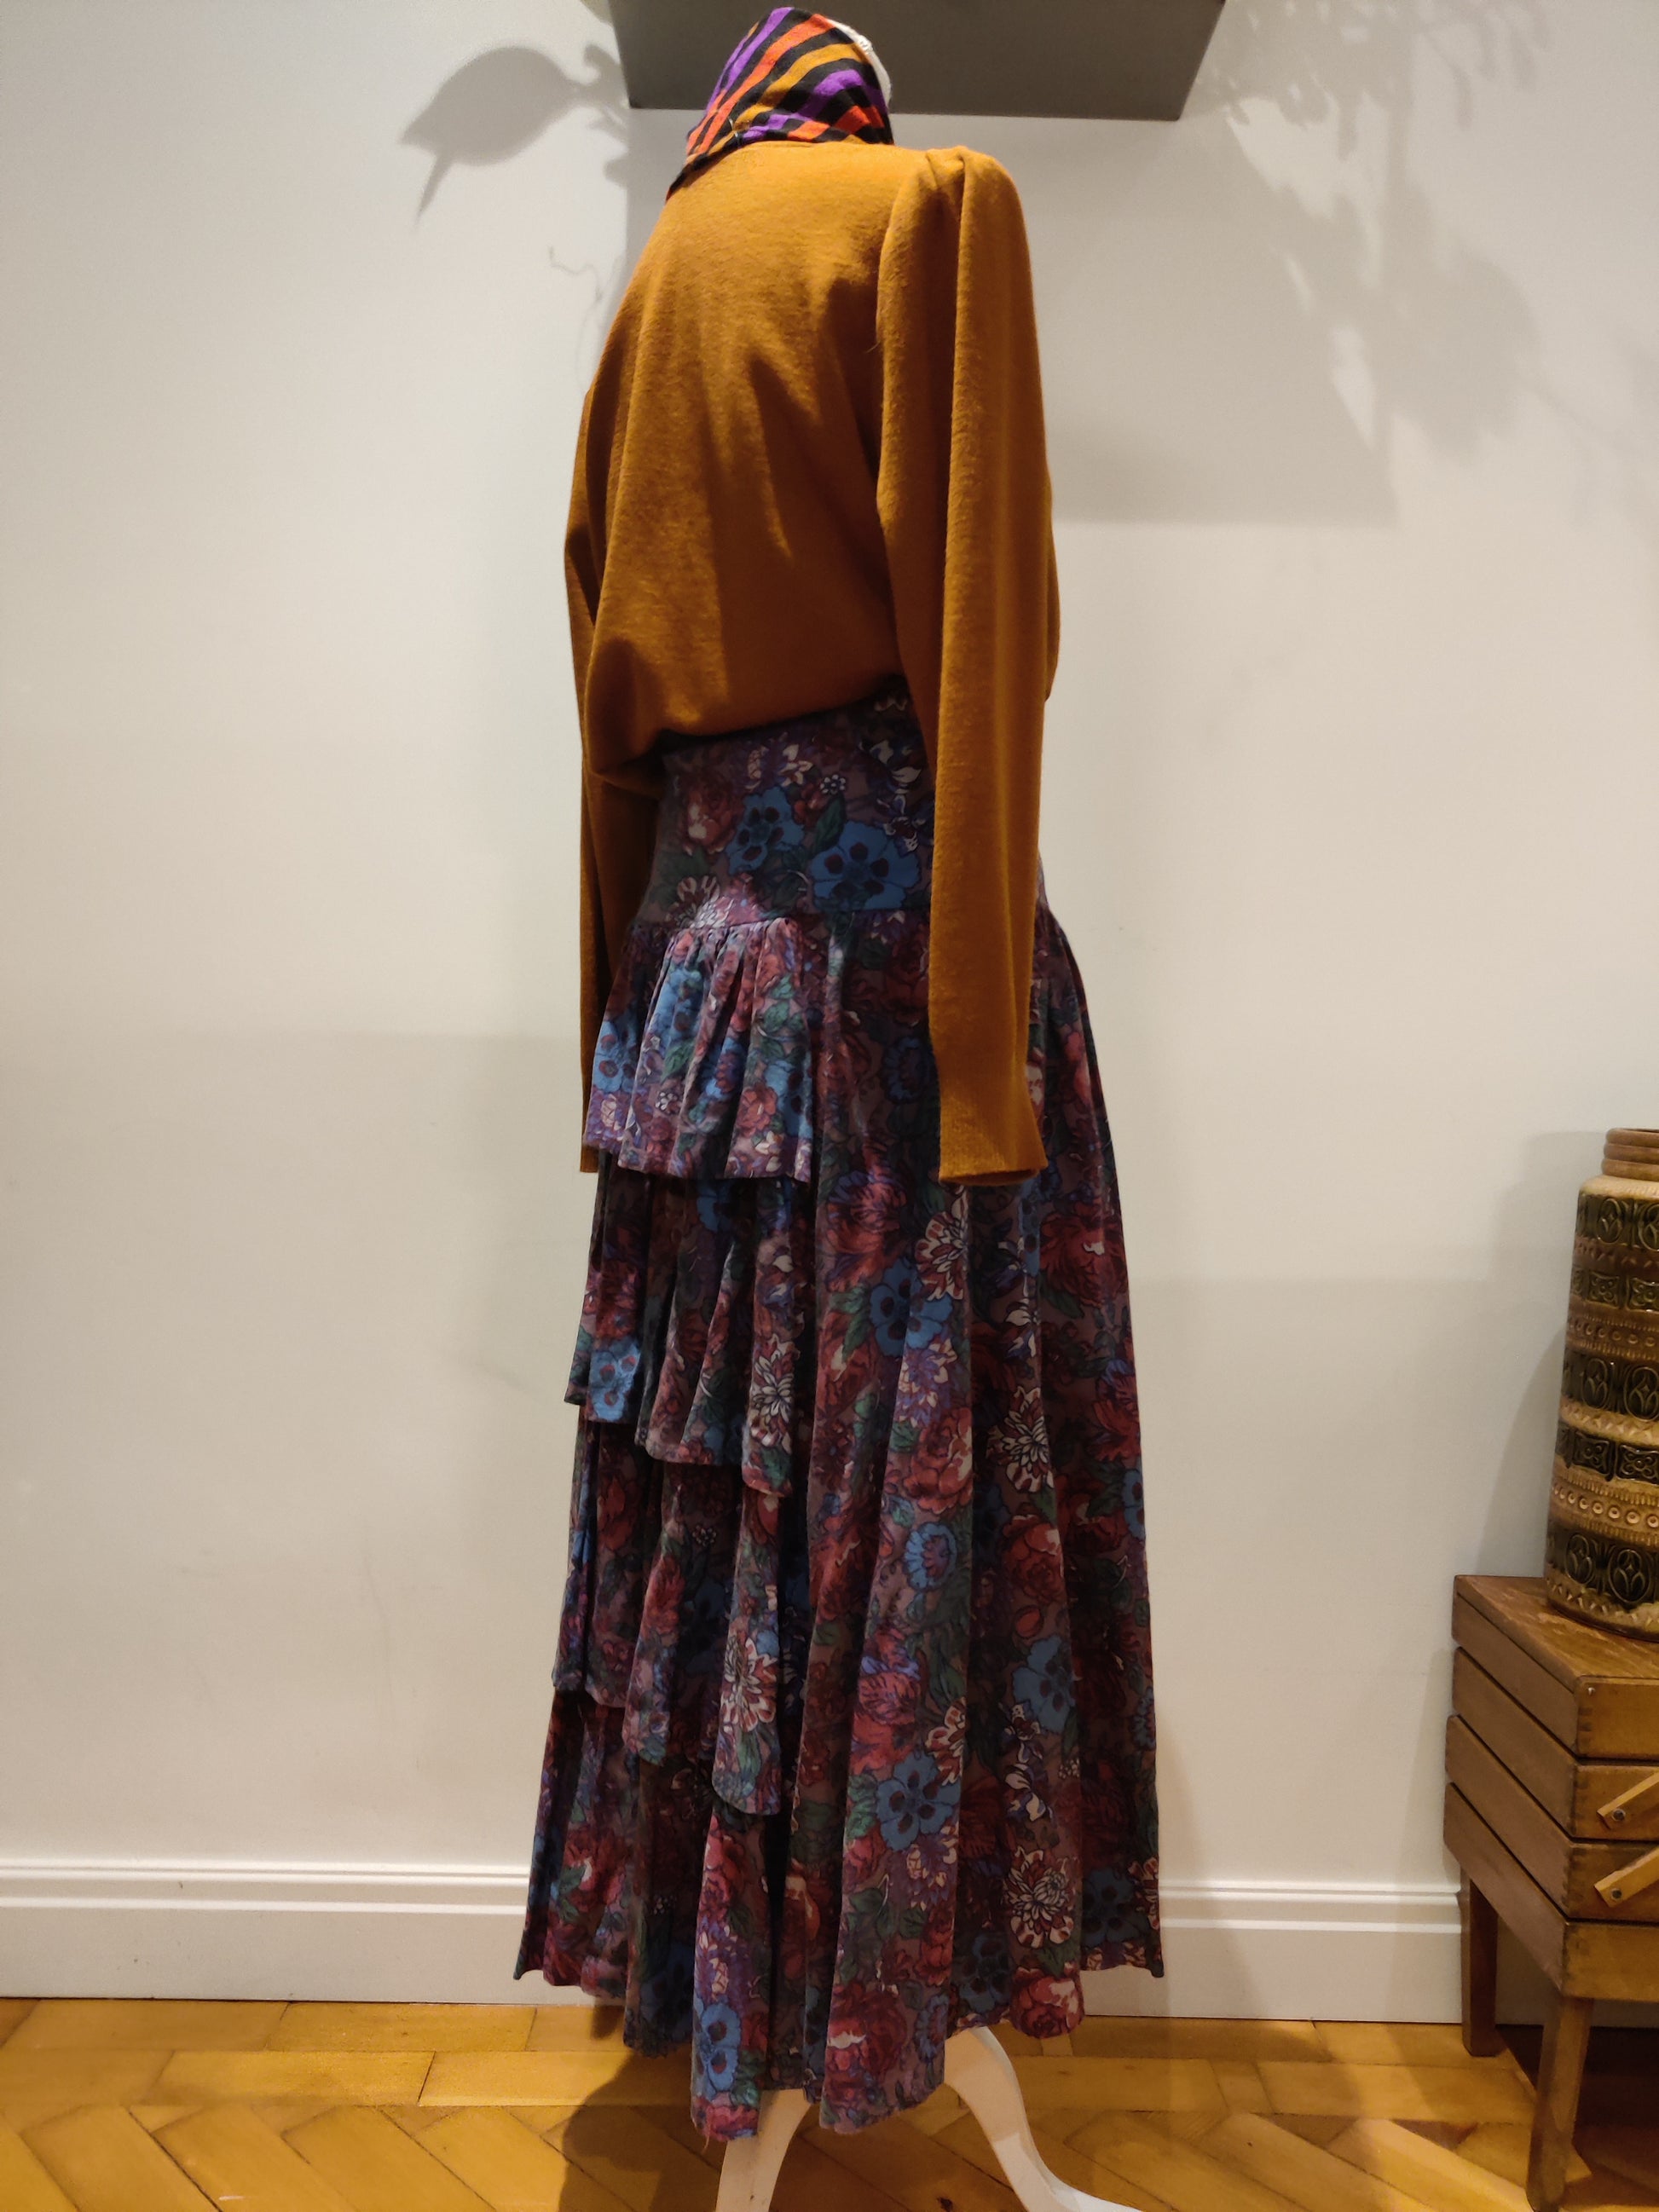 Stunning frill skirt Laura Asley